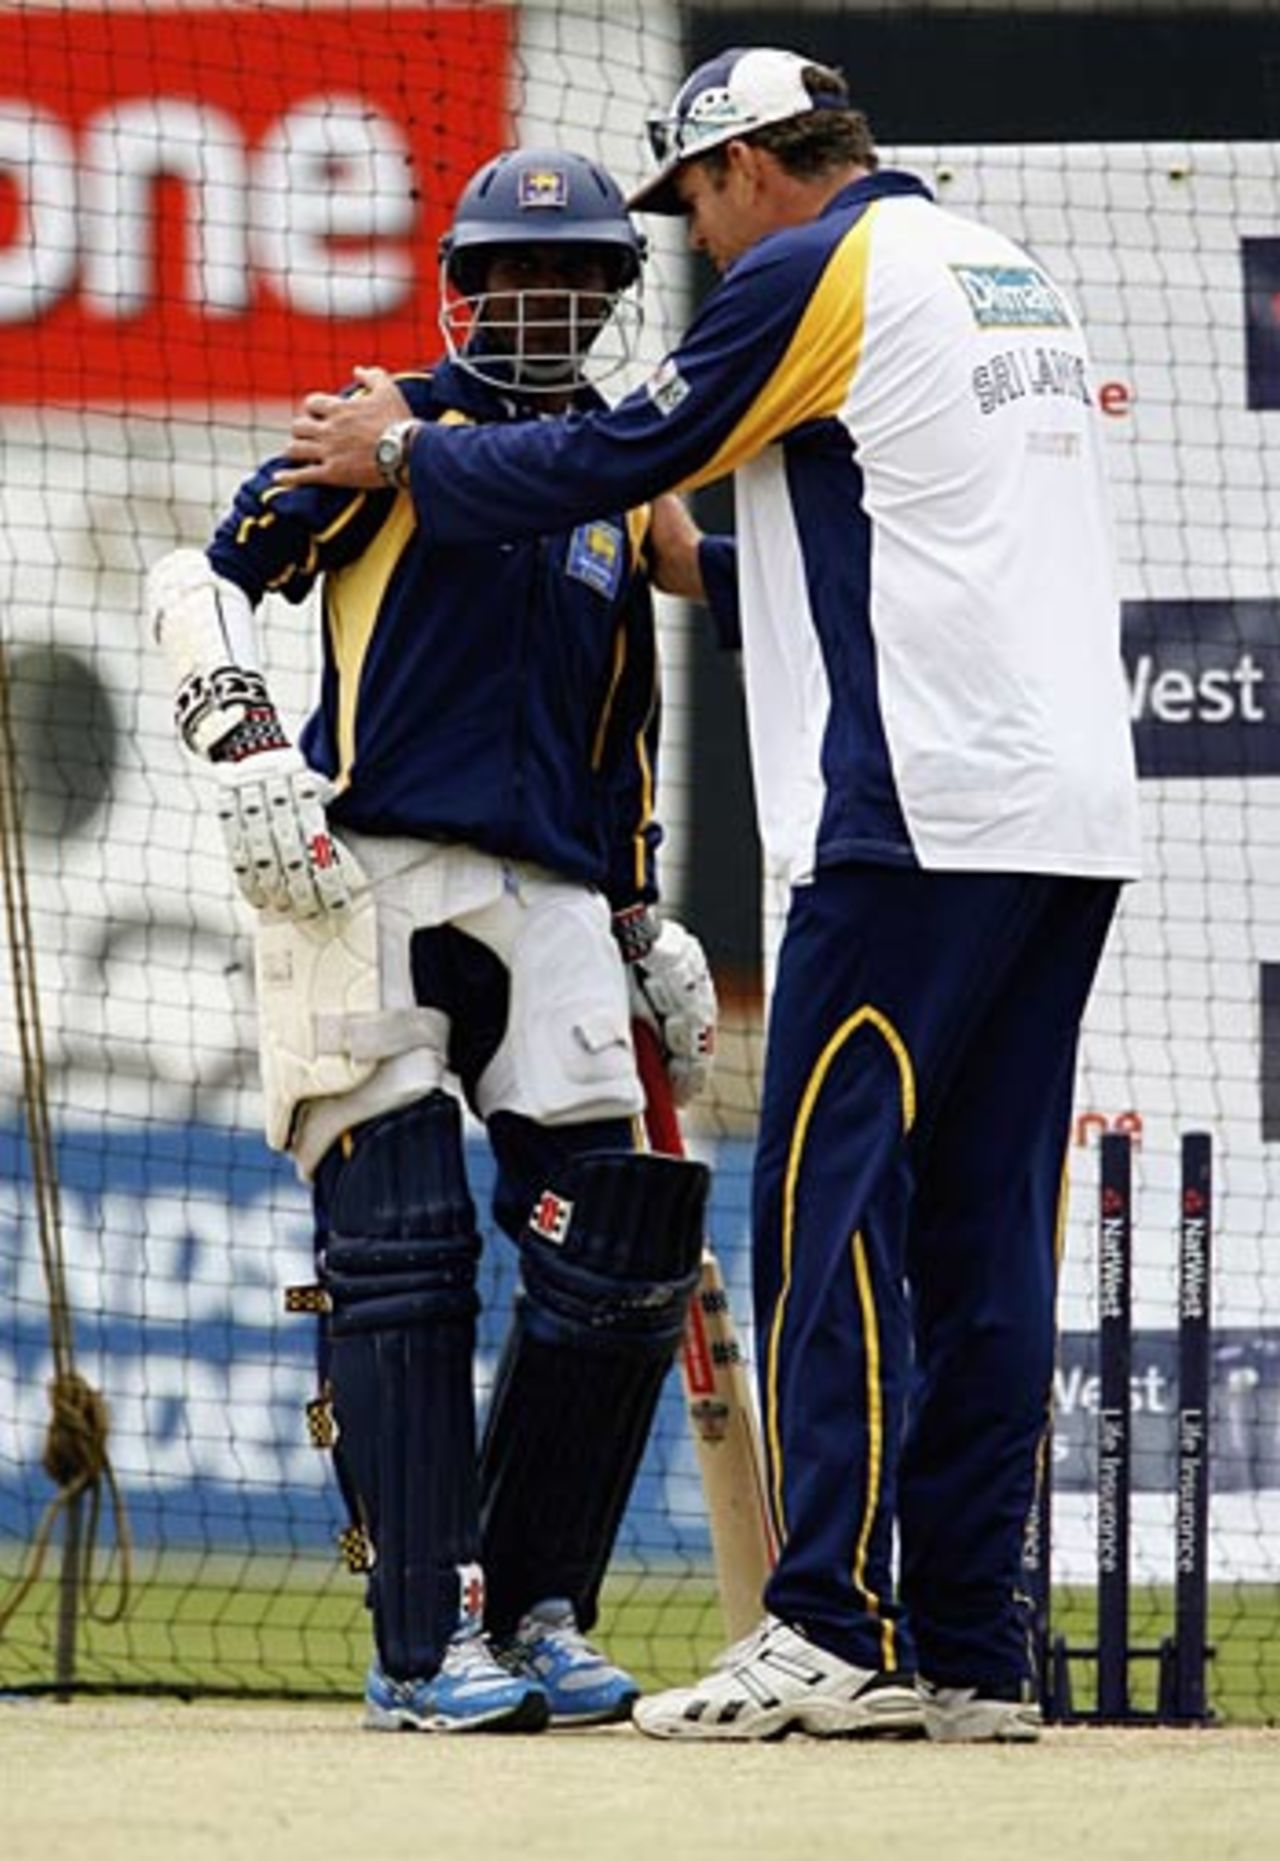 Tom Moody gives Upul Tharanga some advice during Sri Lanka's net session, The Oval, June 19, 2006